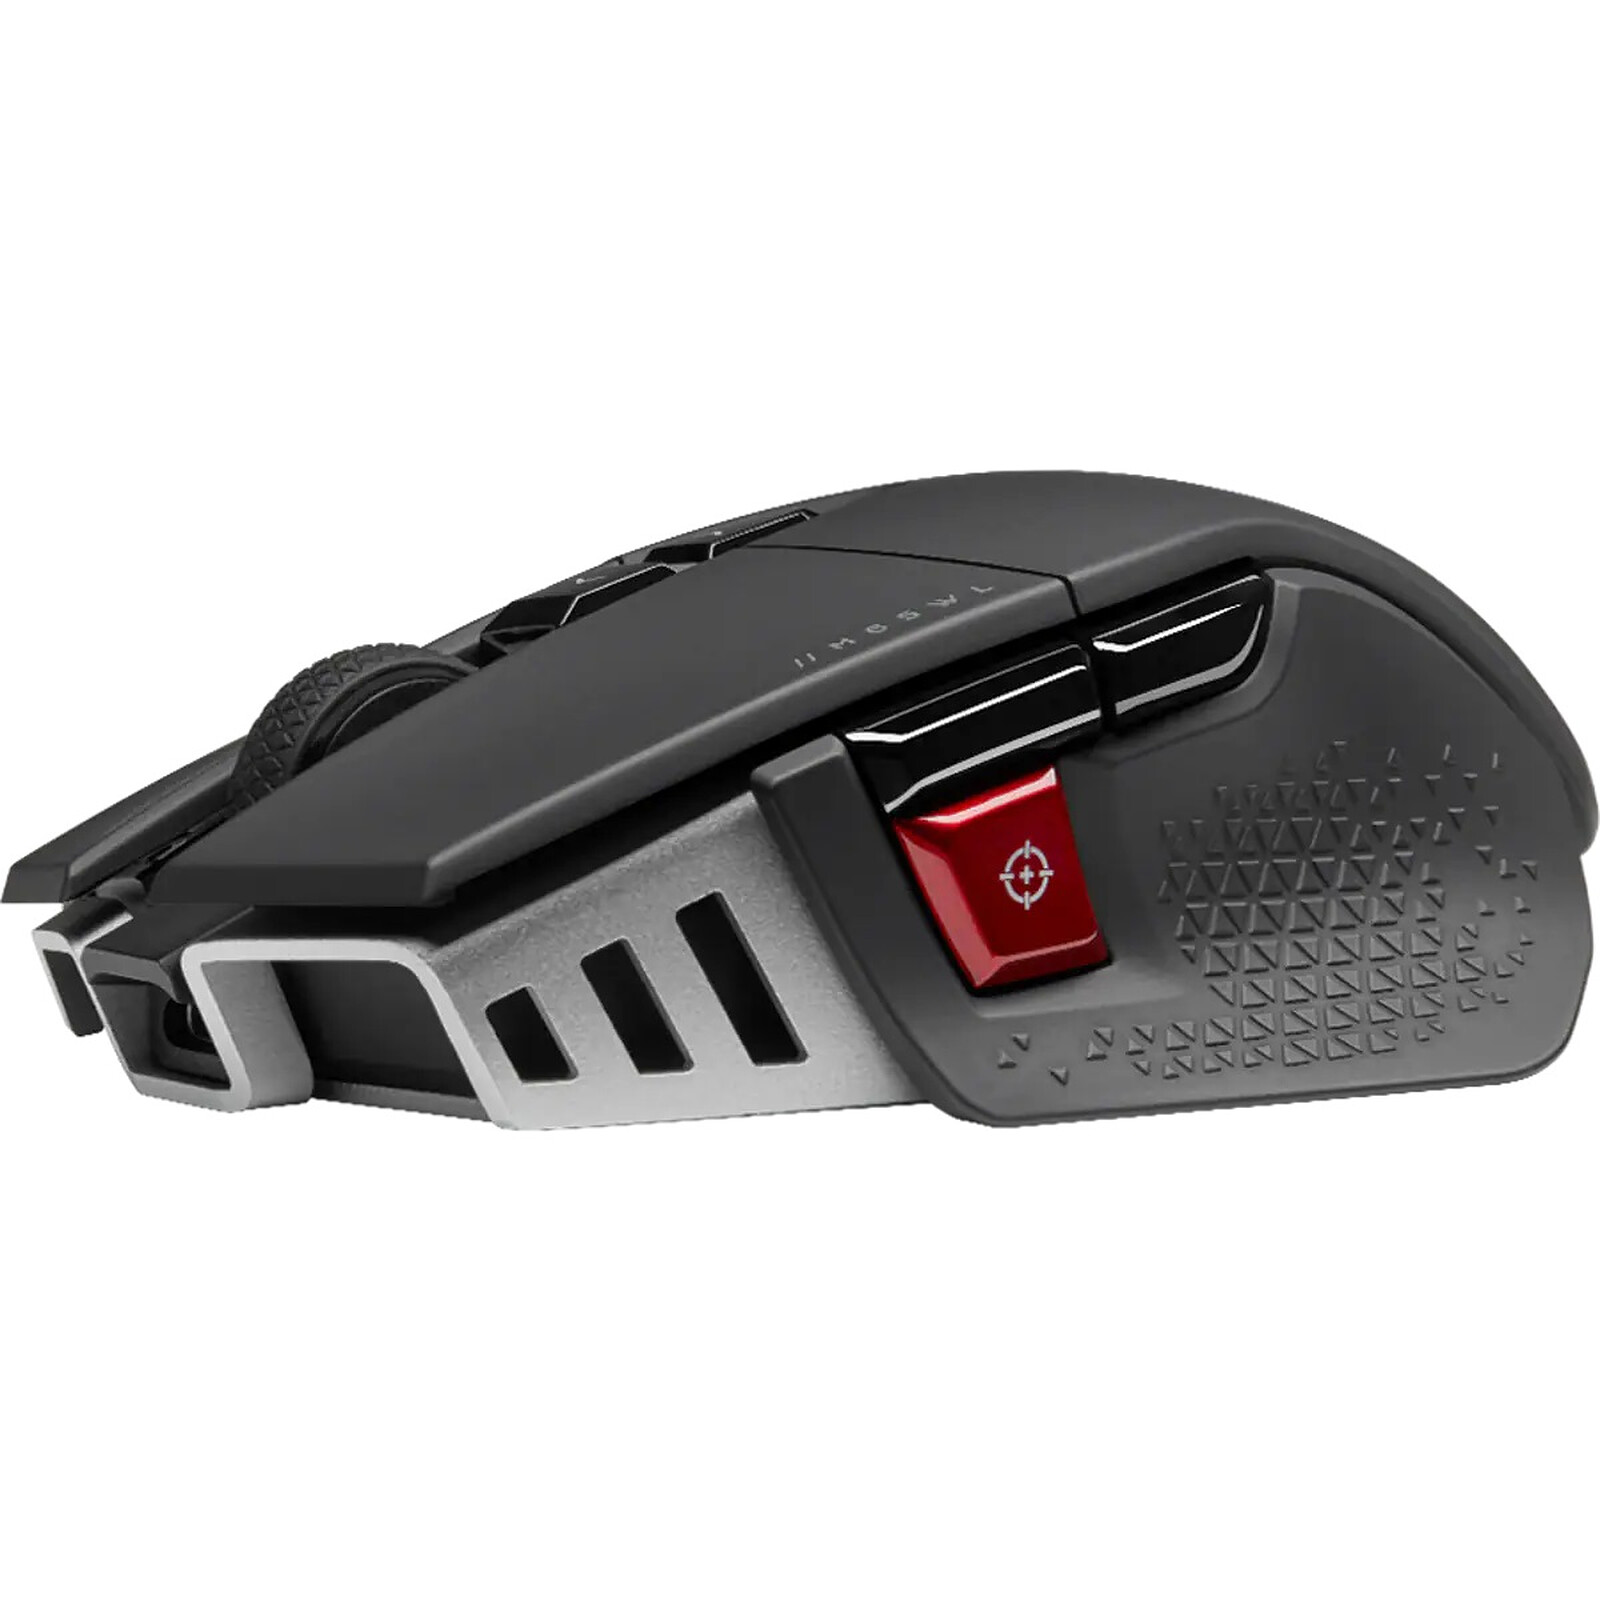 Razer Cobra - Souris PC - Garantie 3 ans LDLC